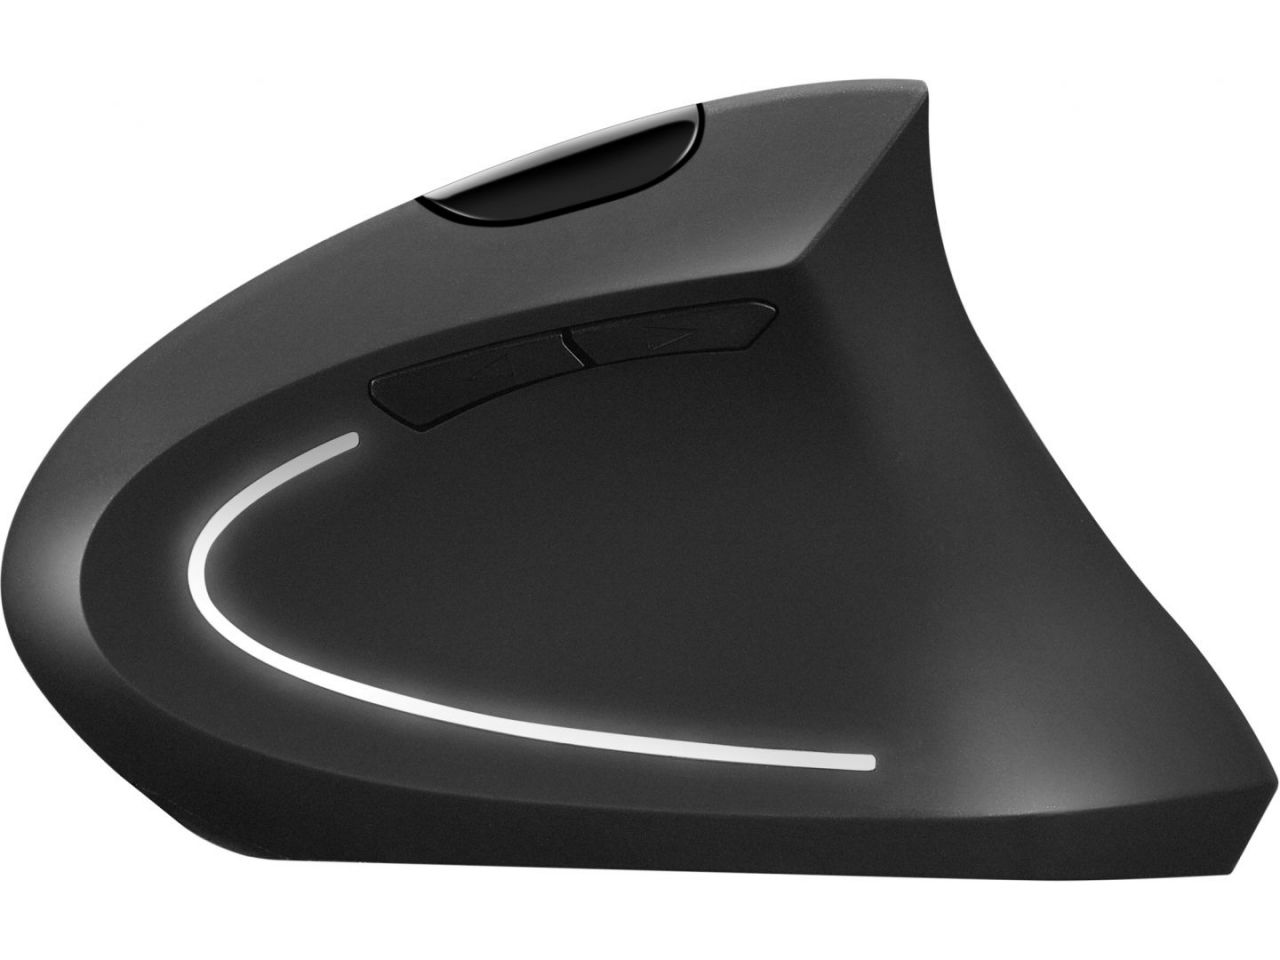 Sandberg Wired Vertical Mouse Black